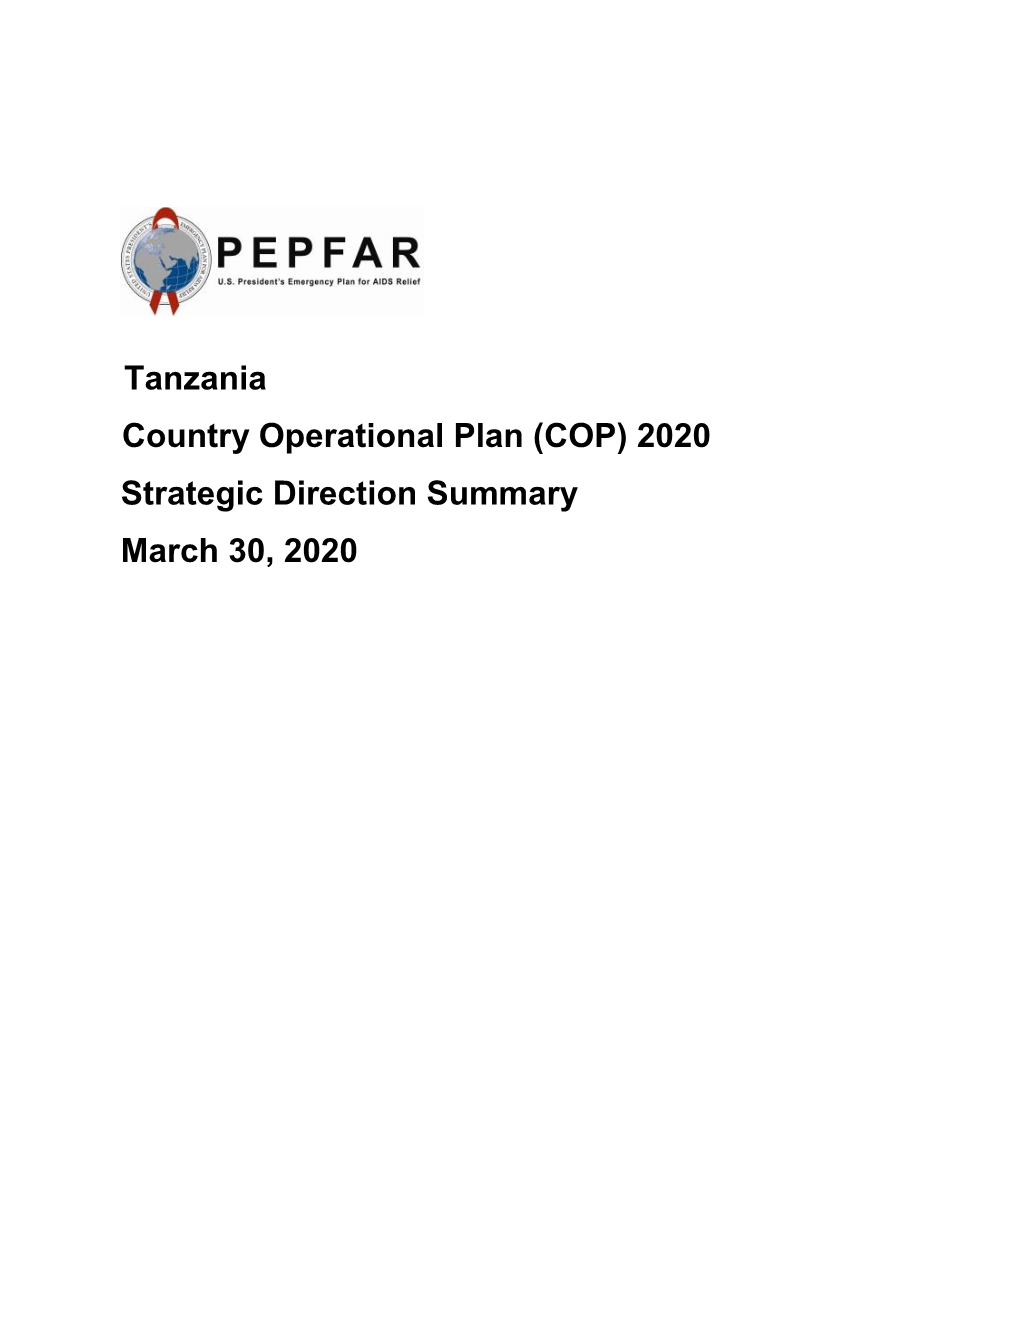 Tanzania 2020 COP